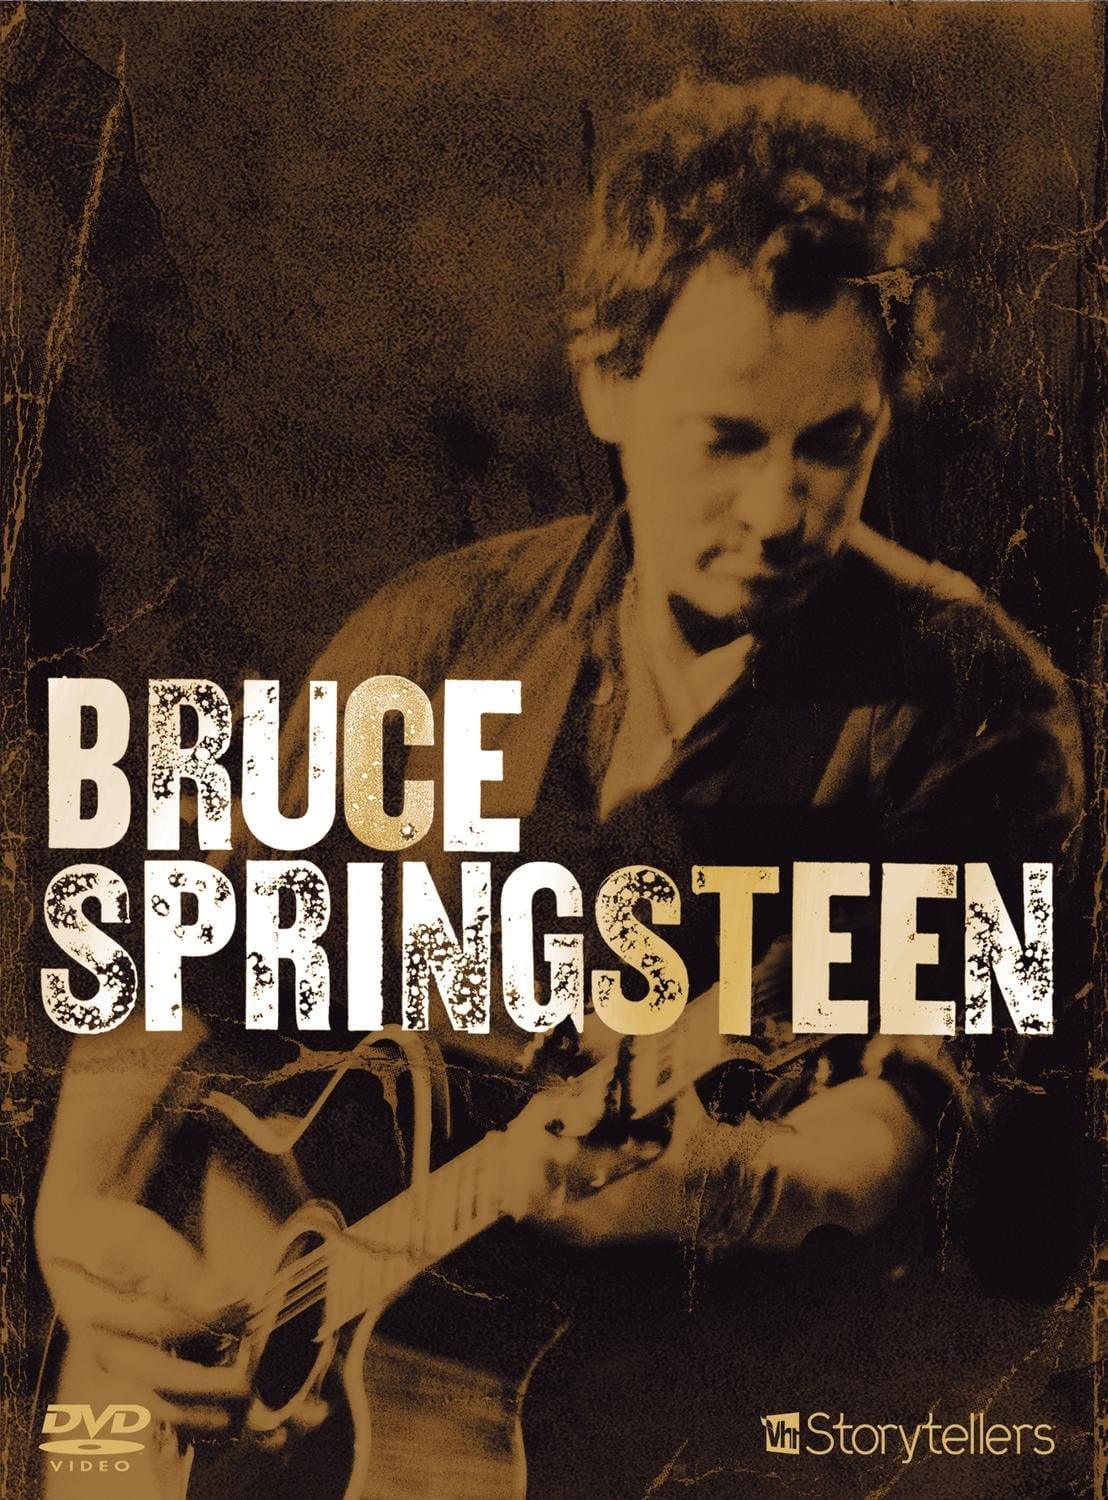 Bruce Springsteen VH-1 Storytellers front cover